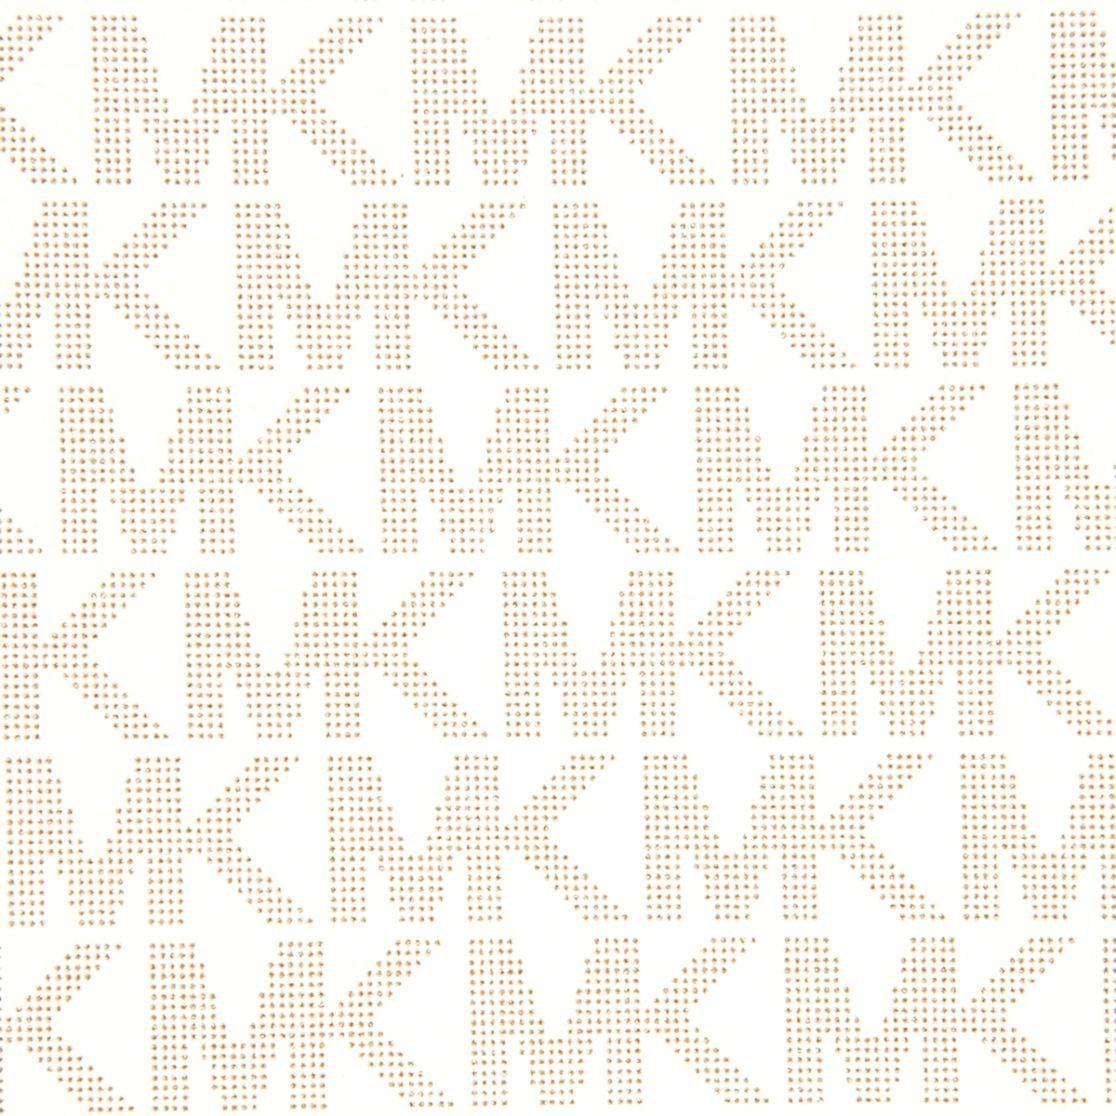 Download wallpapers Michael Kors carbon logo, 4k, grunge art, carbon  background, creative, Michael Kors black logo, fashion brands, Michael Kors  logo, Michael Kors for desktop free. Pictures for desktop free